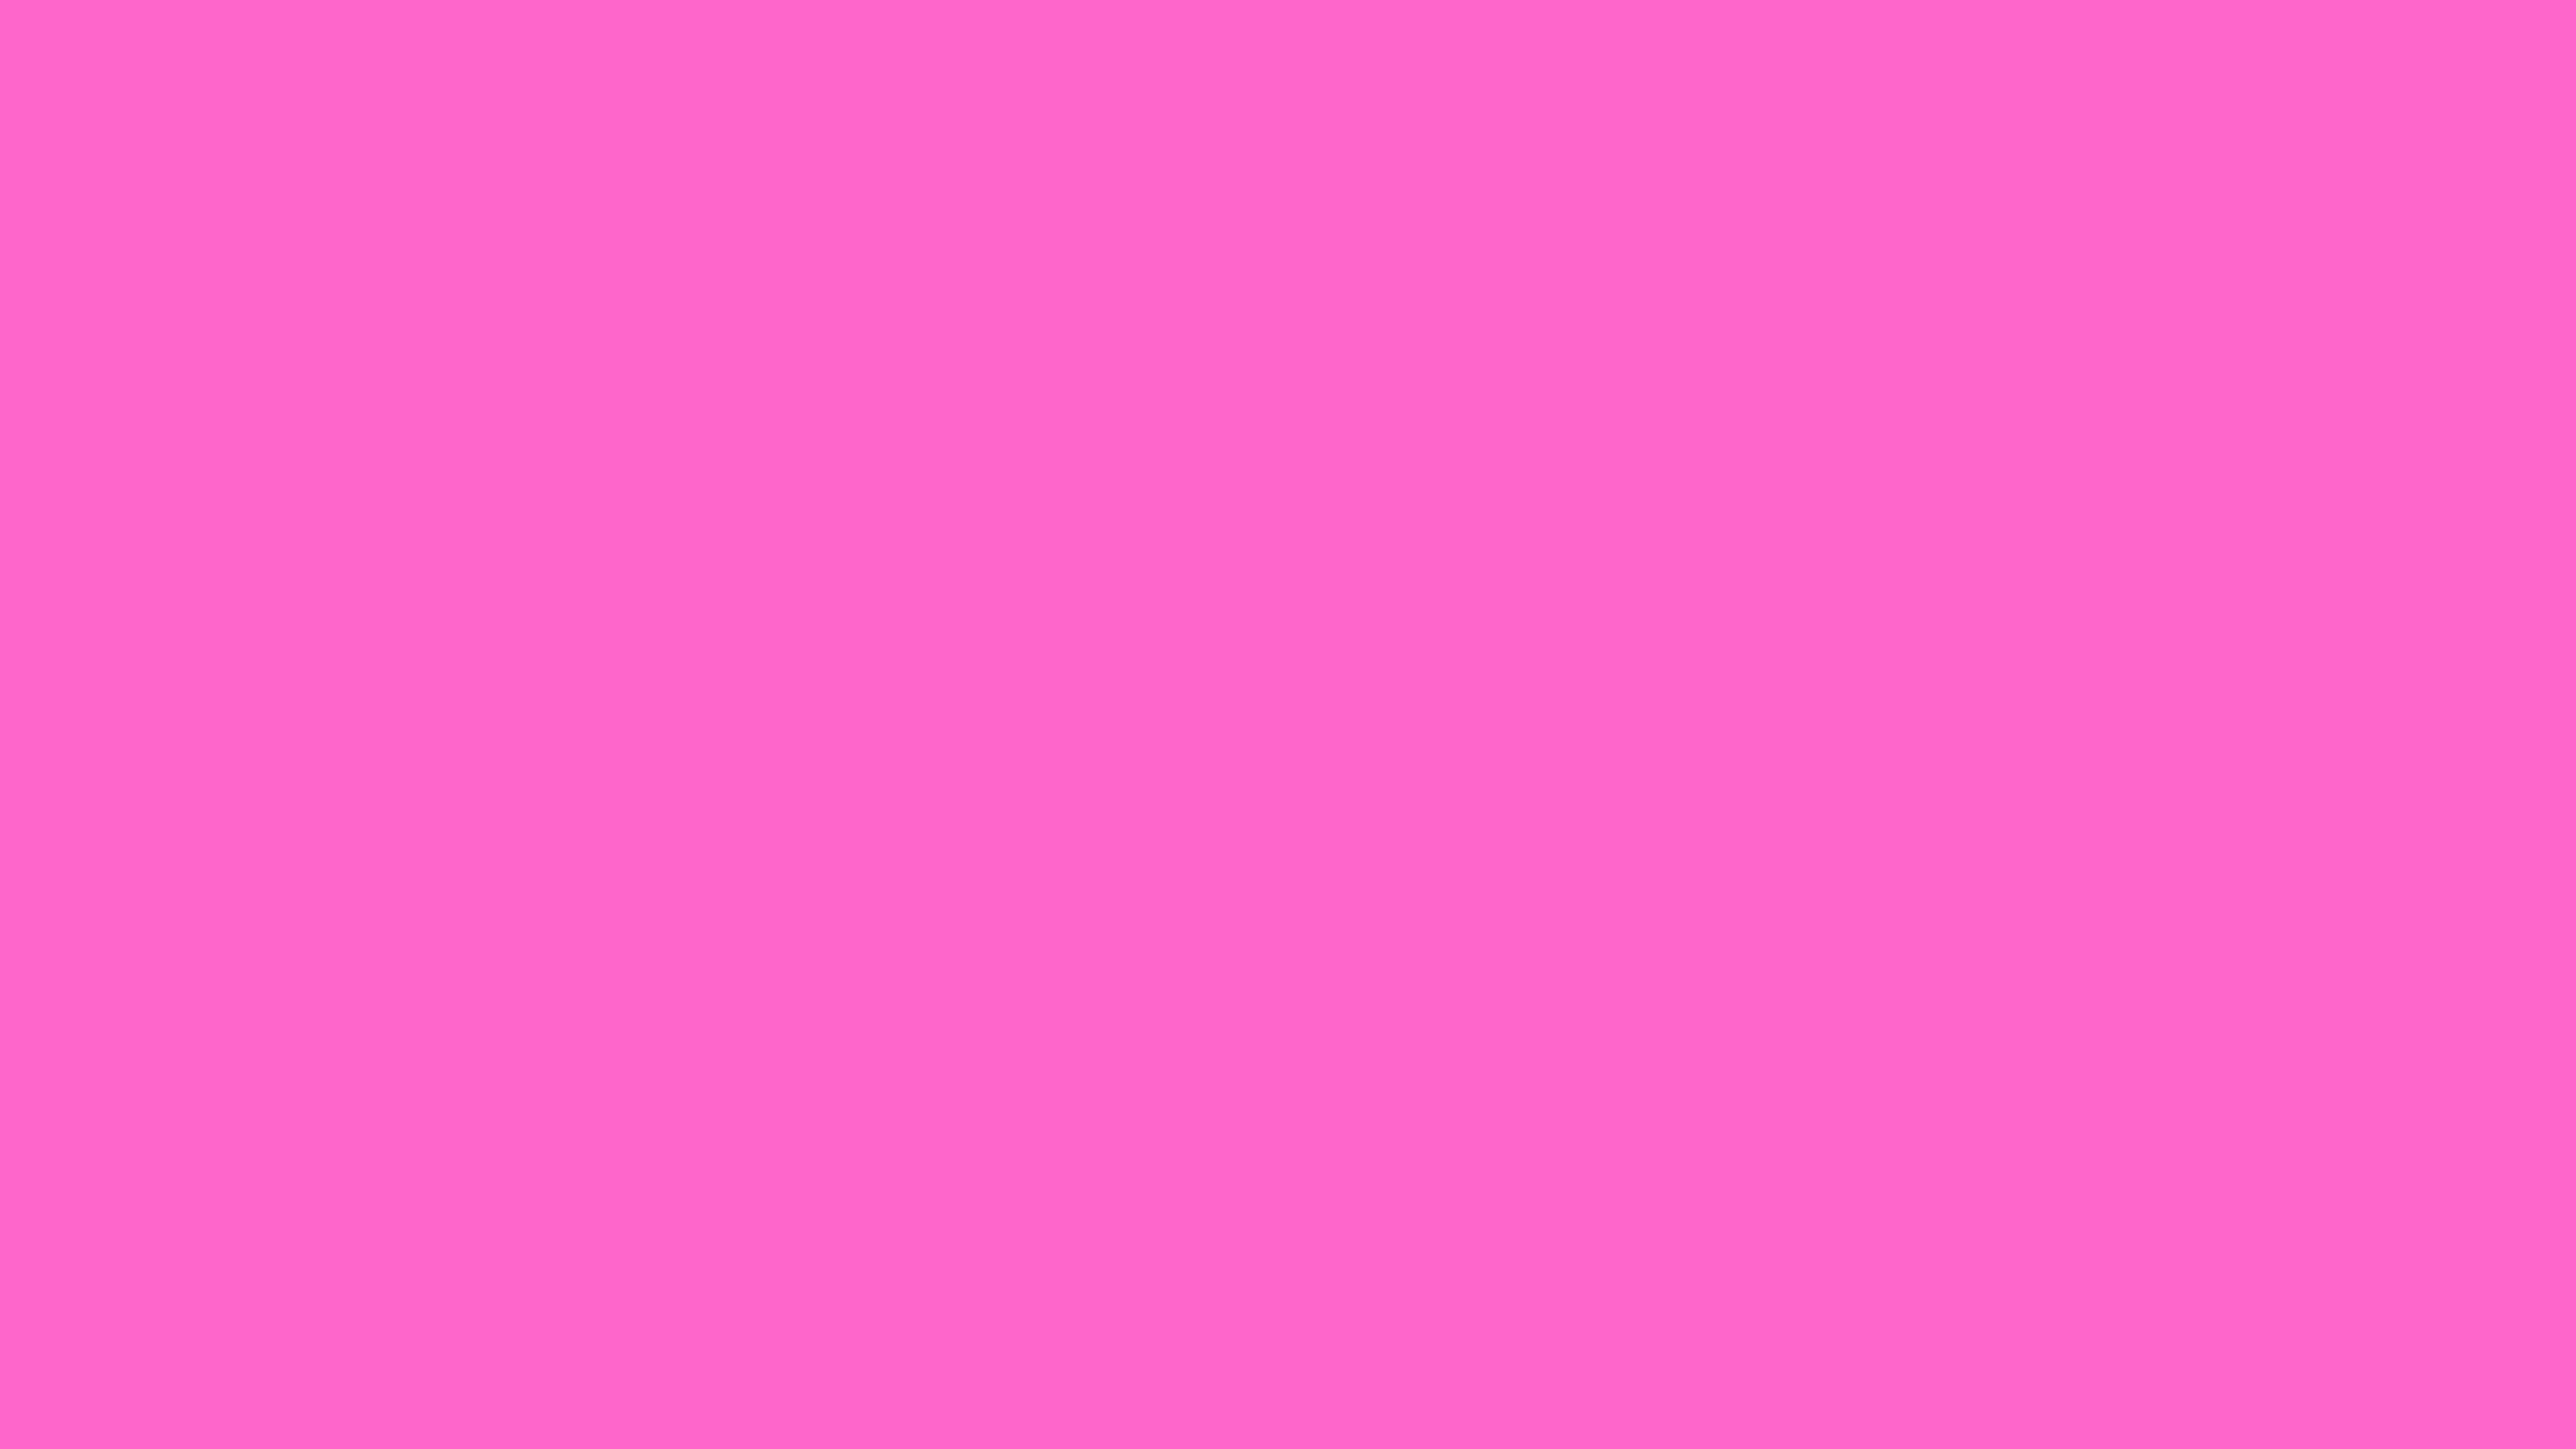 7680x4320 Rose Pink Solid Color Background